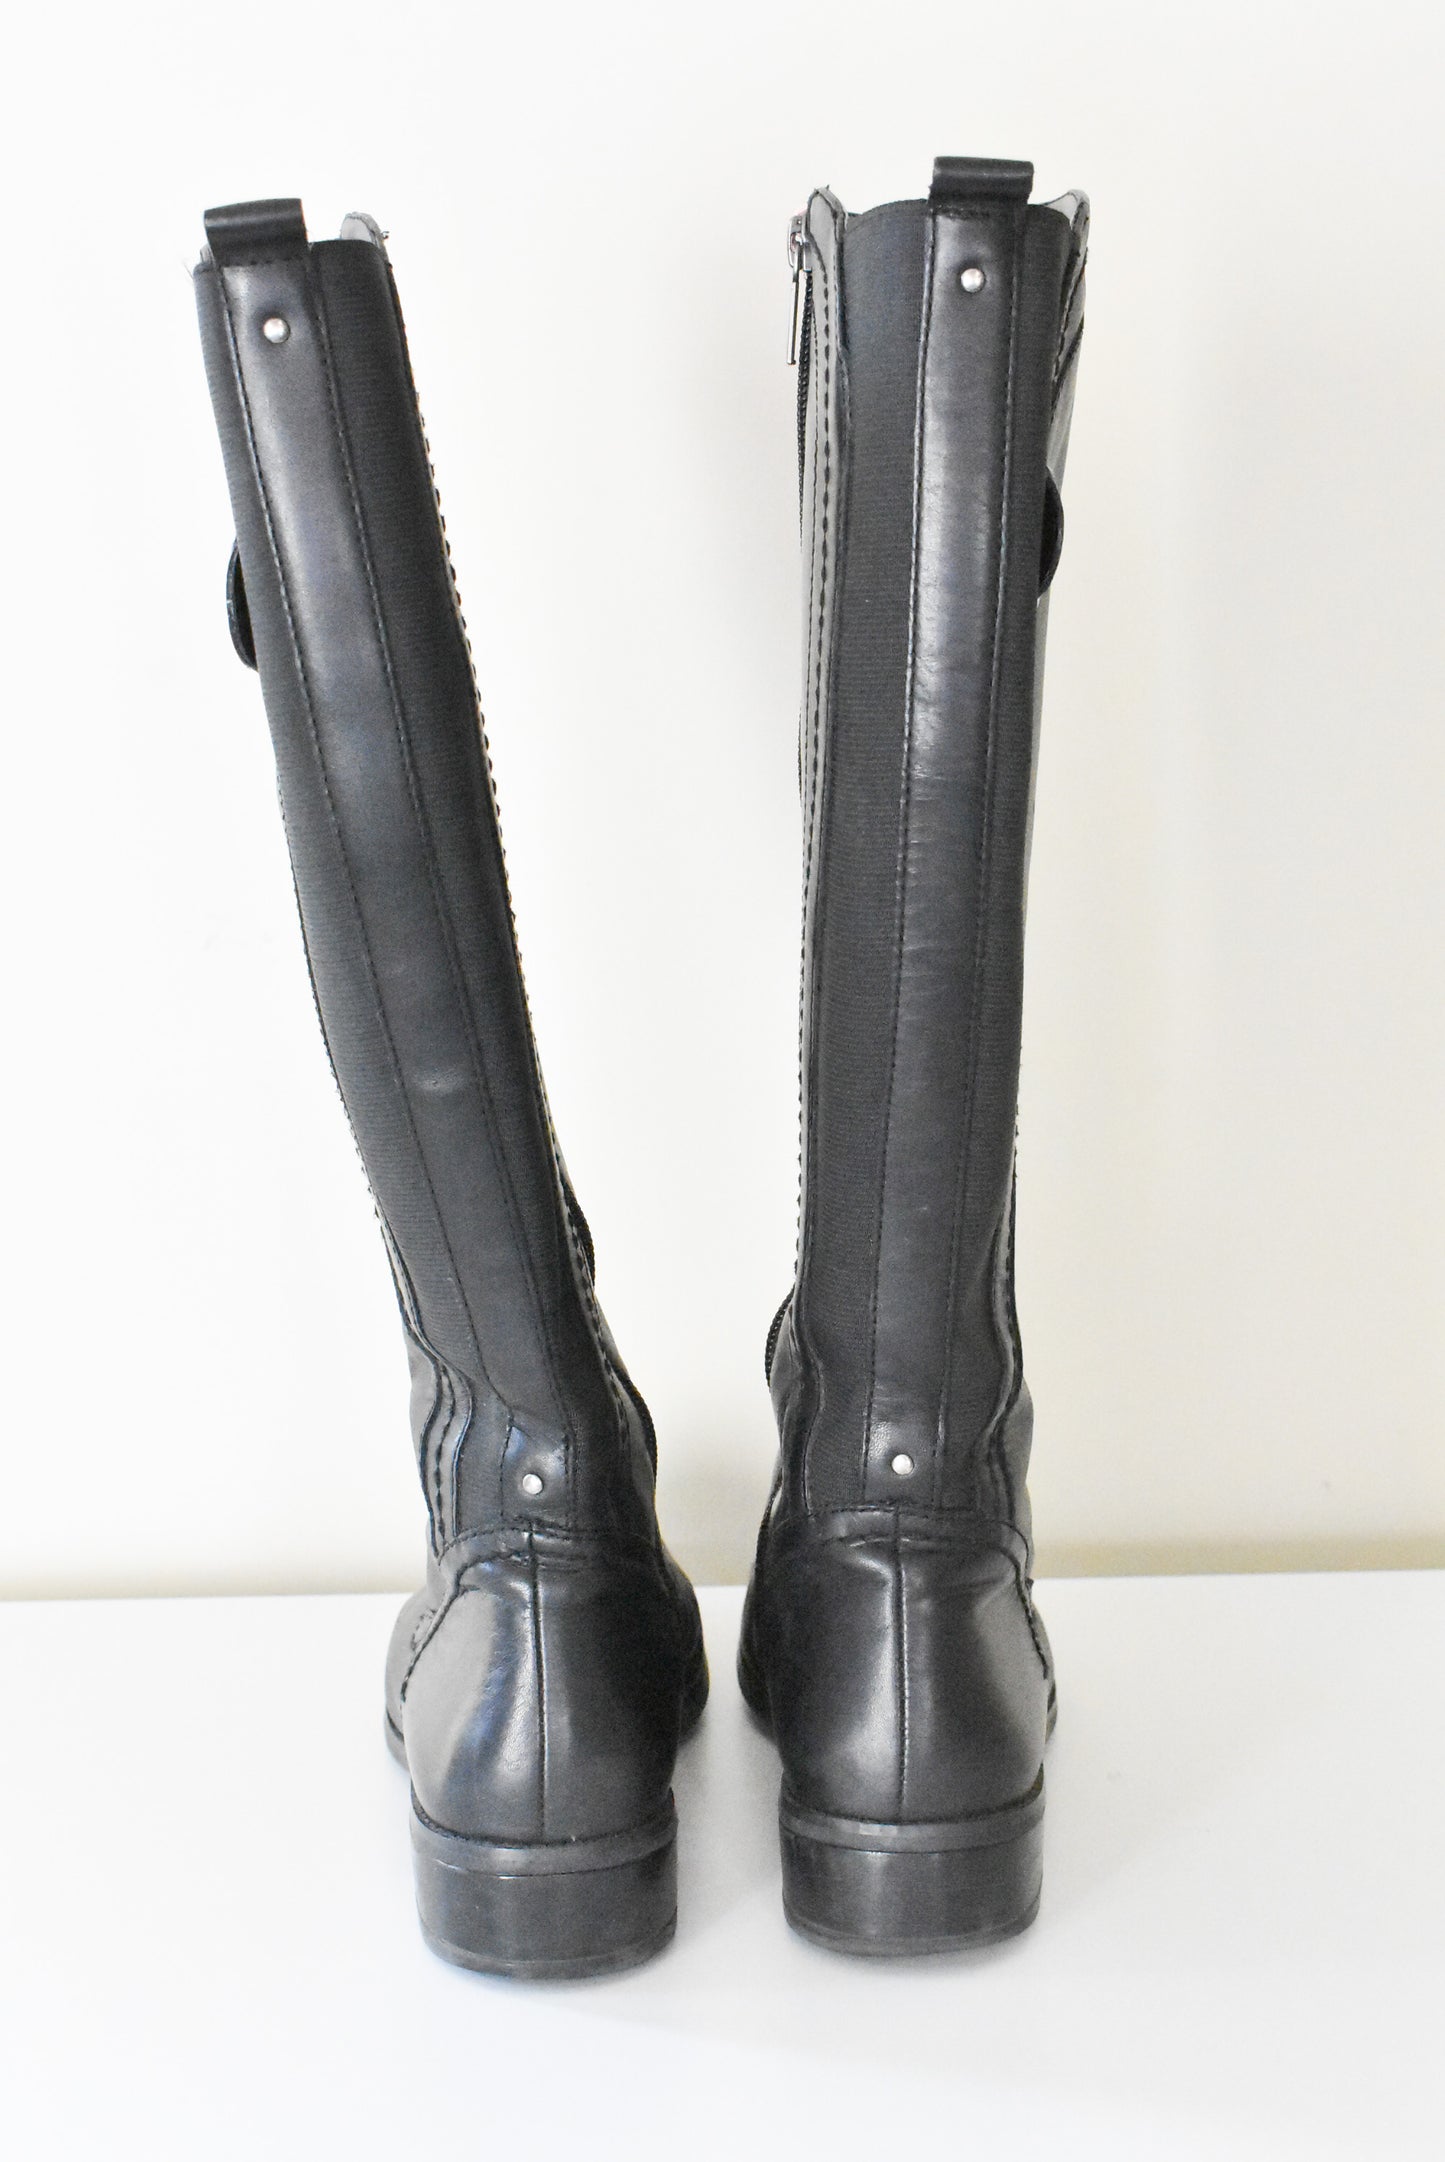 Diana Ferrari, Black knee high boots, 6.5